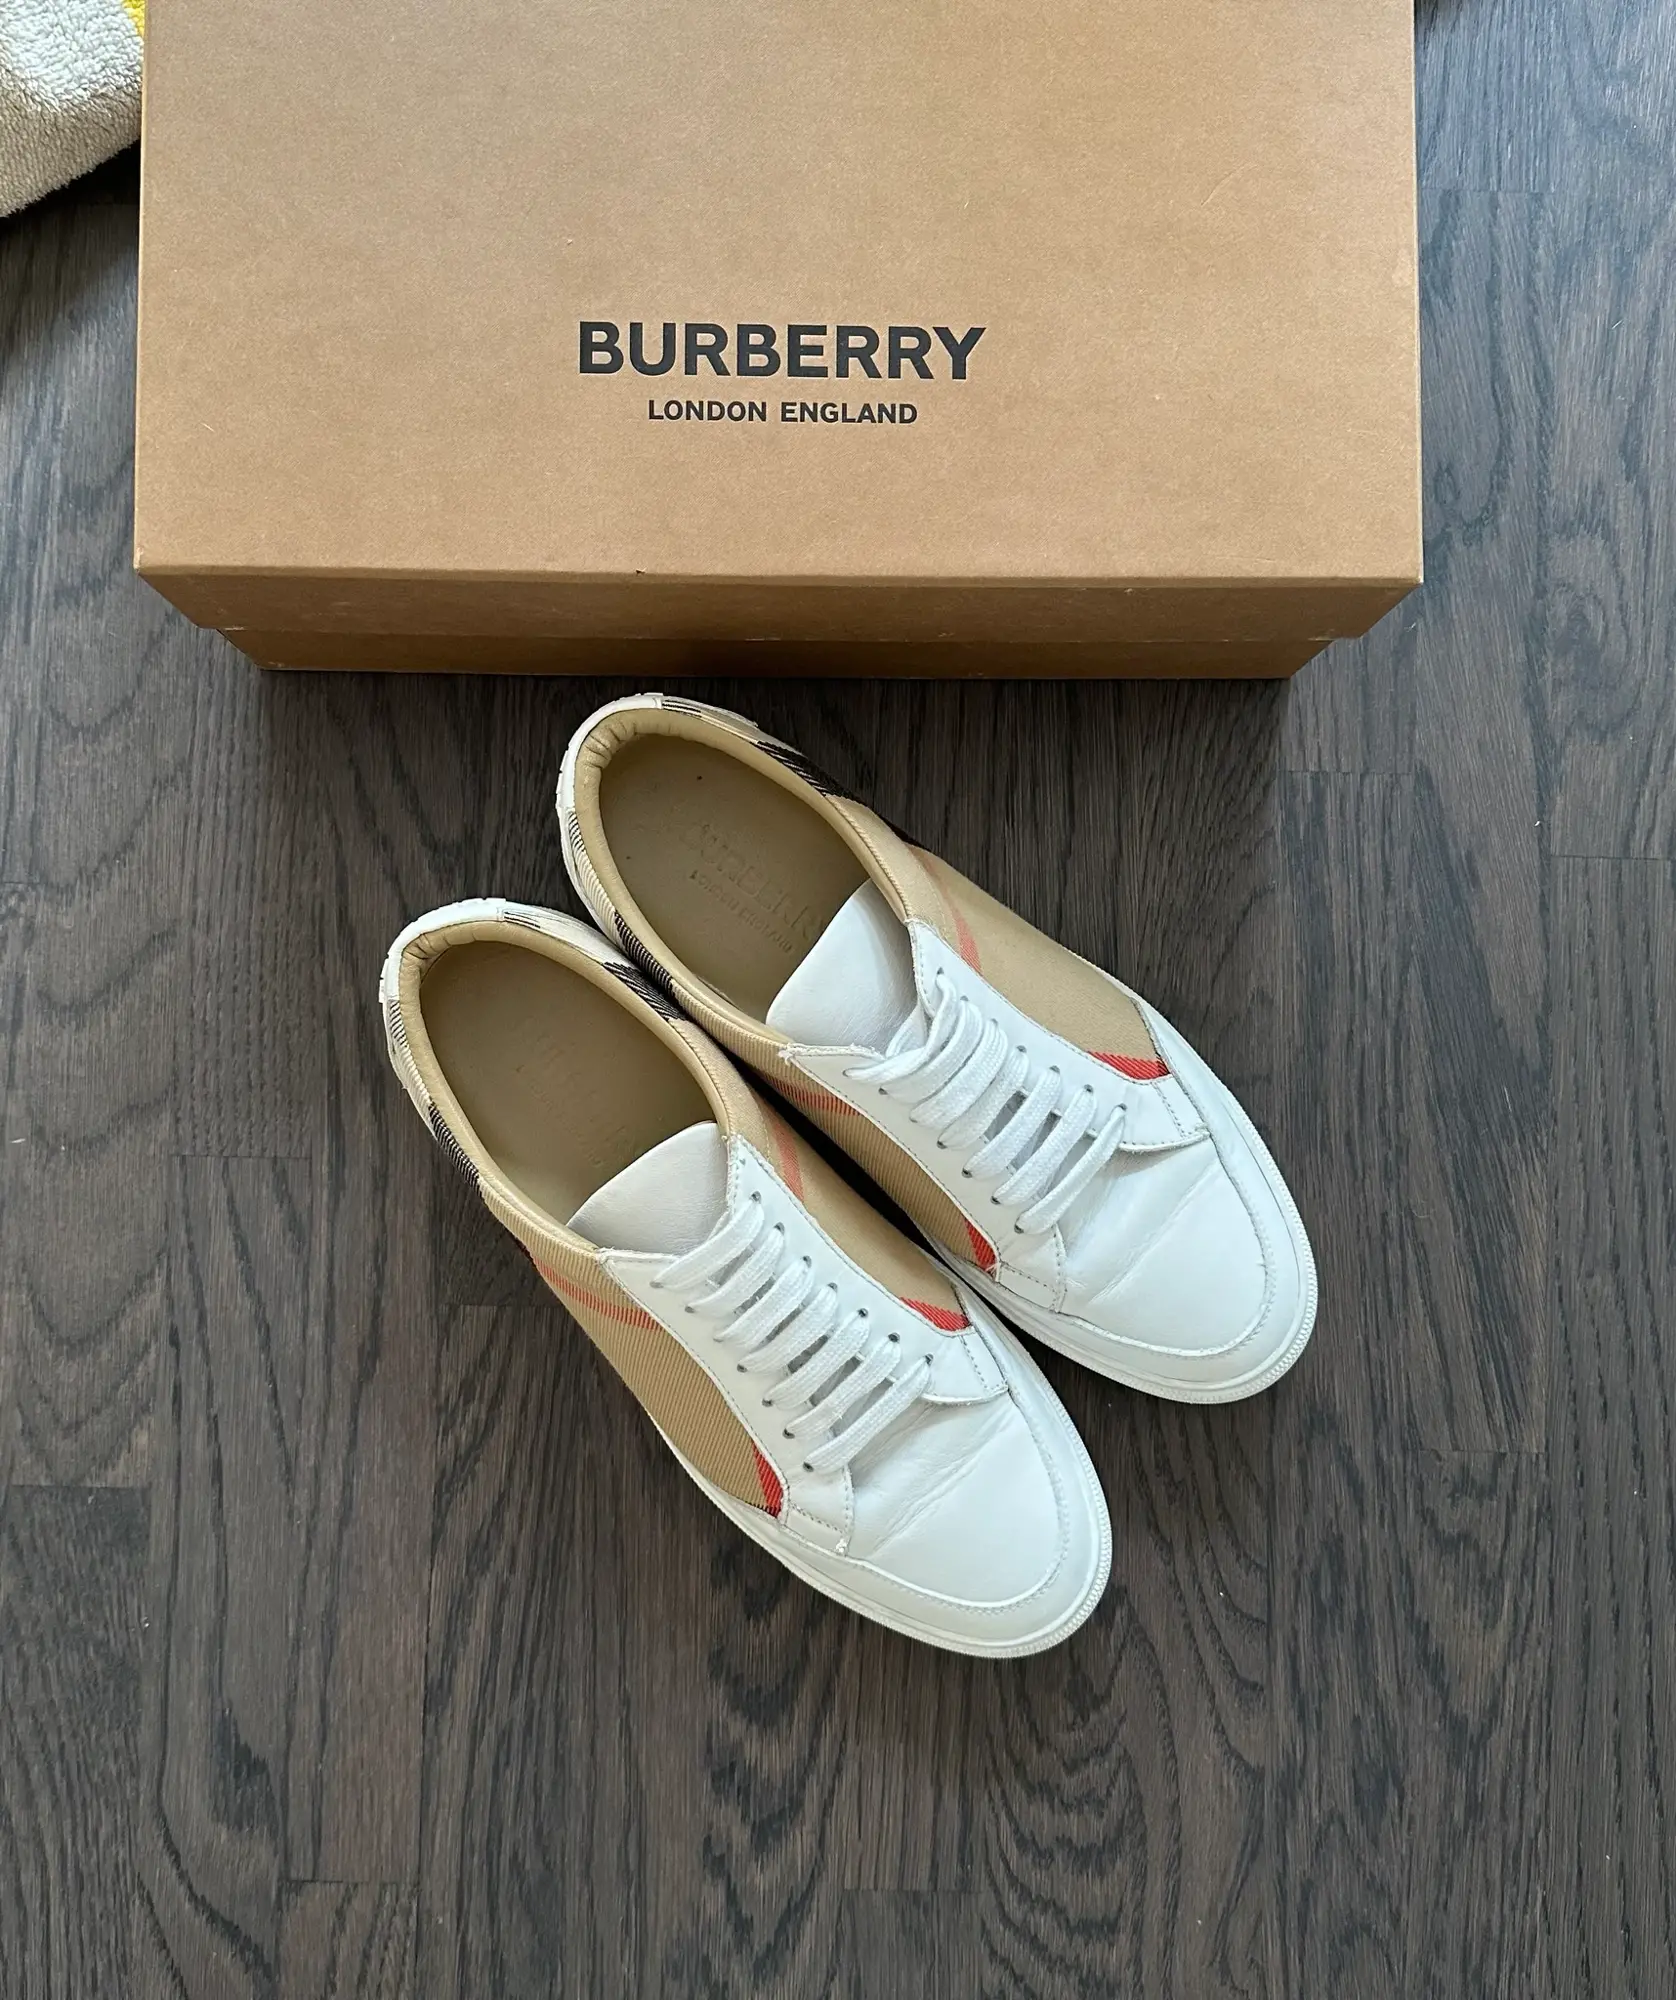 Burberry sneakers